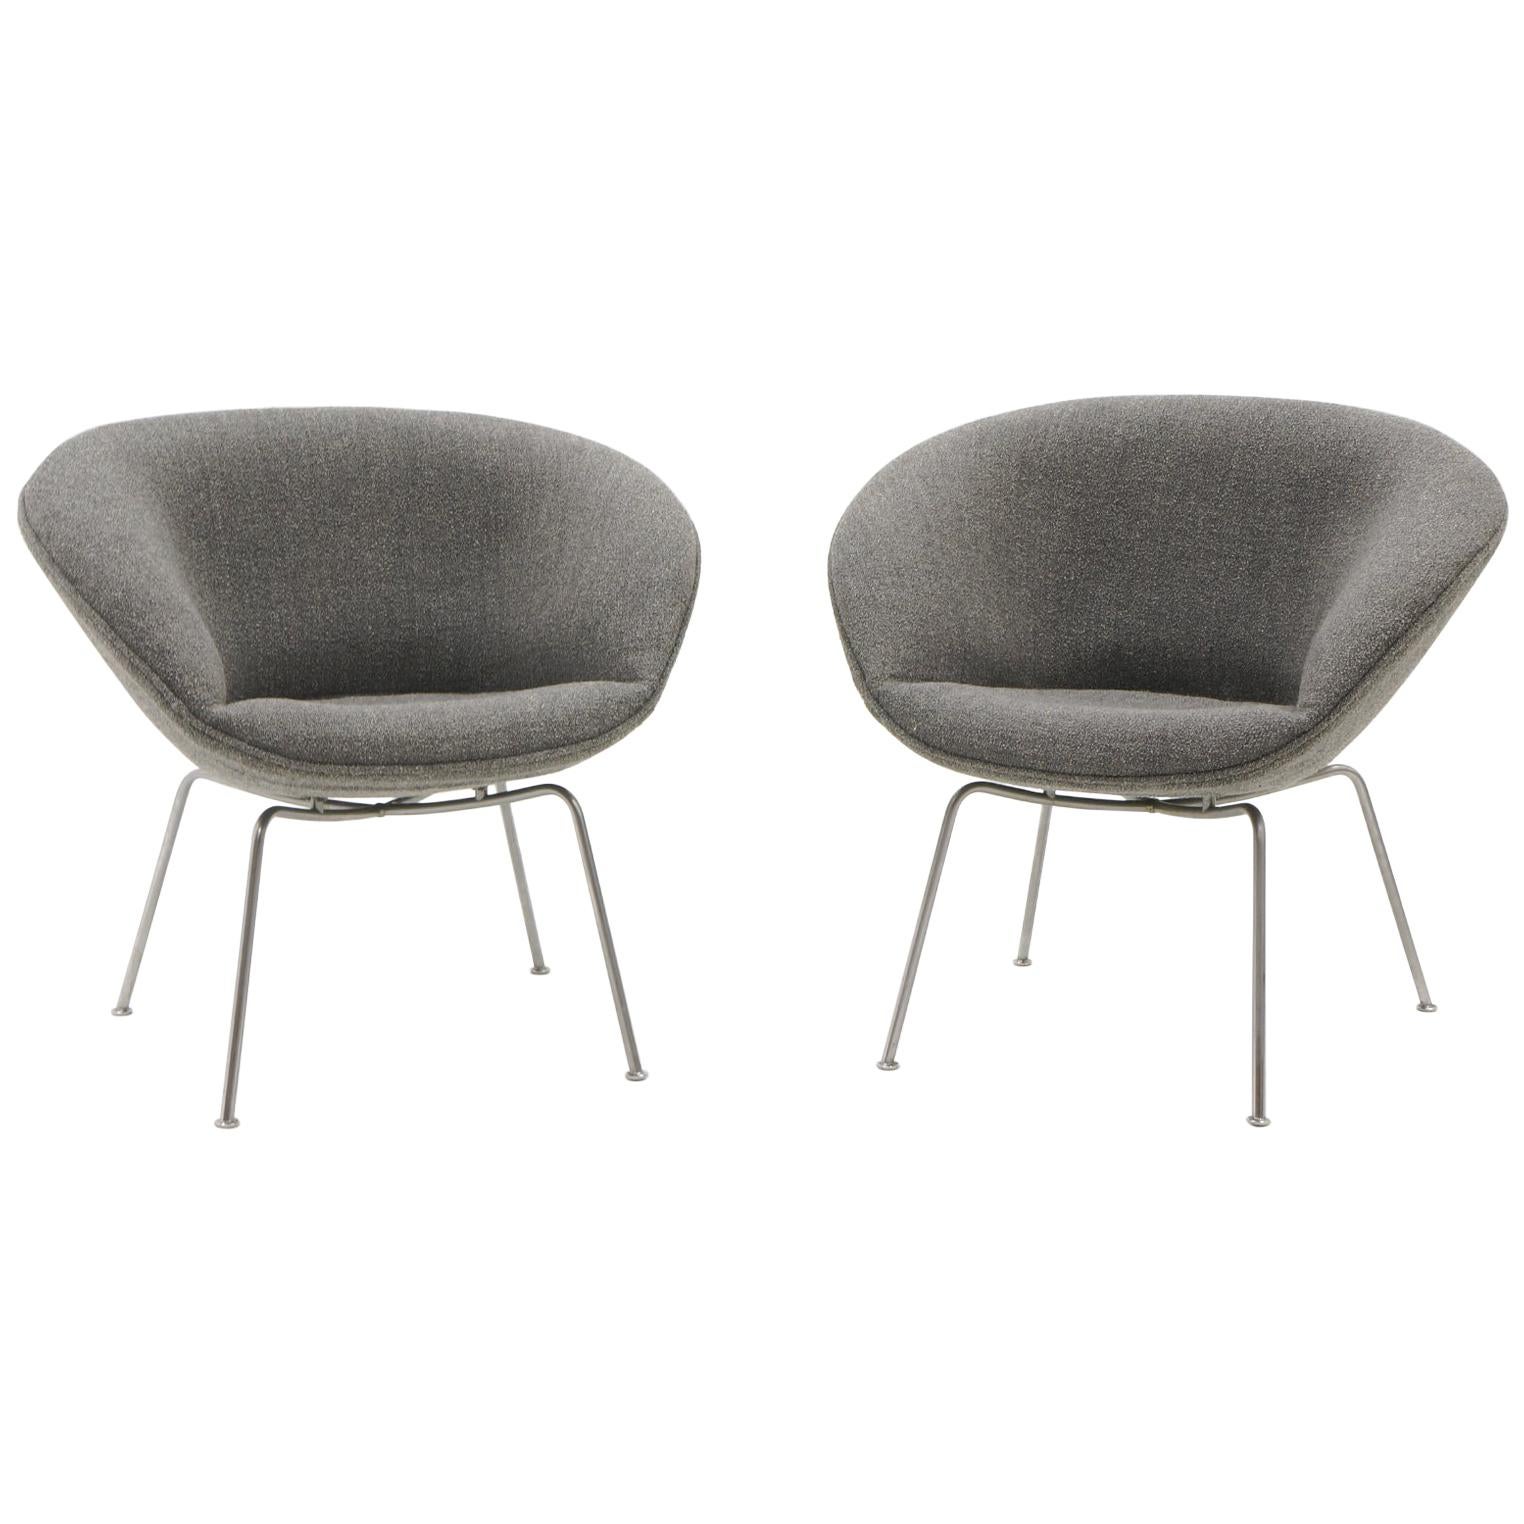 Pair of Pot Chairs by Arne Jacobsen for Fritz Hansen, Restored, Maharam Fabric